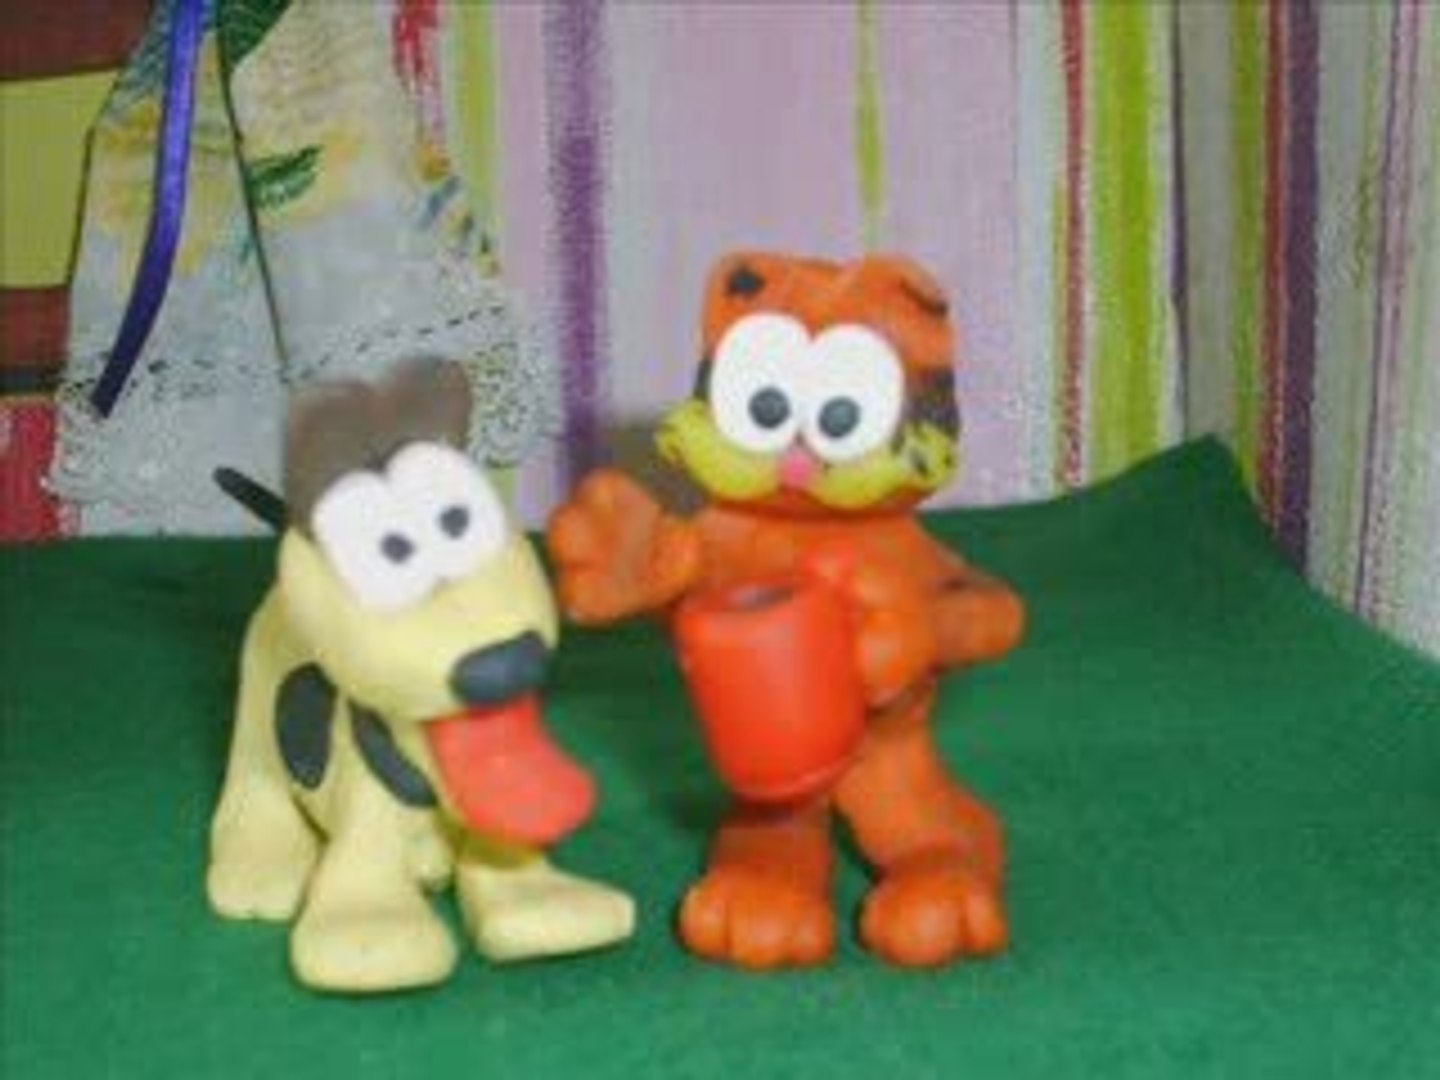 Coucou (Oddie et Garfield) - video Dailymotion